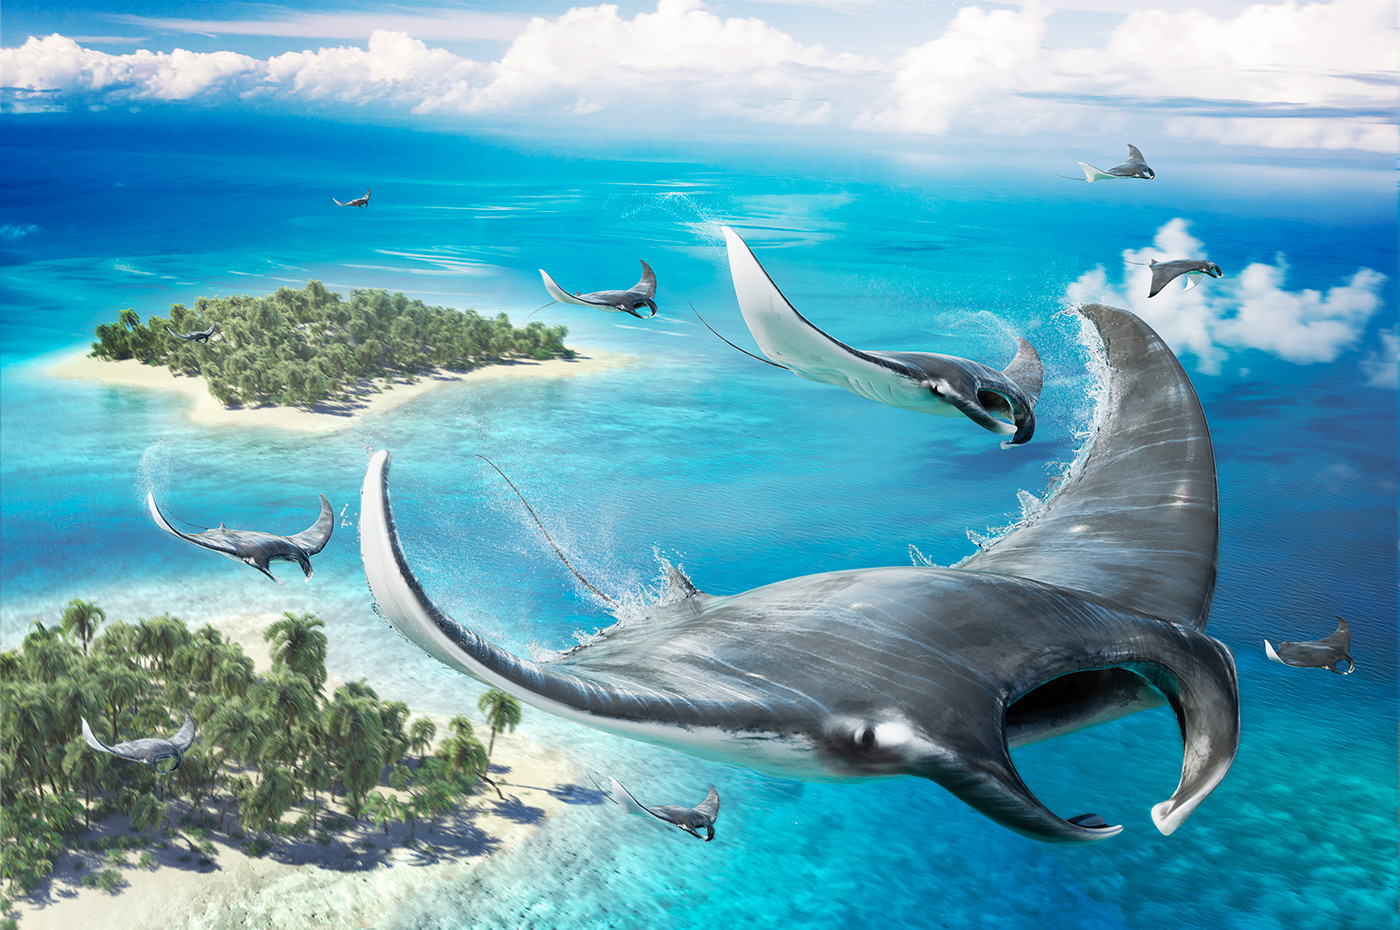 CGI vfx 3D Landscape SKY fantasy Ocean sea fresh Caribbean sci-fi surreal clouds Flying Aerial